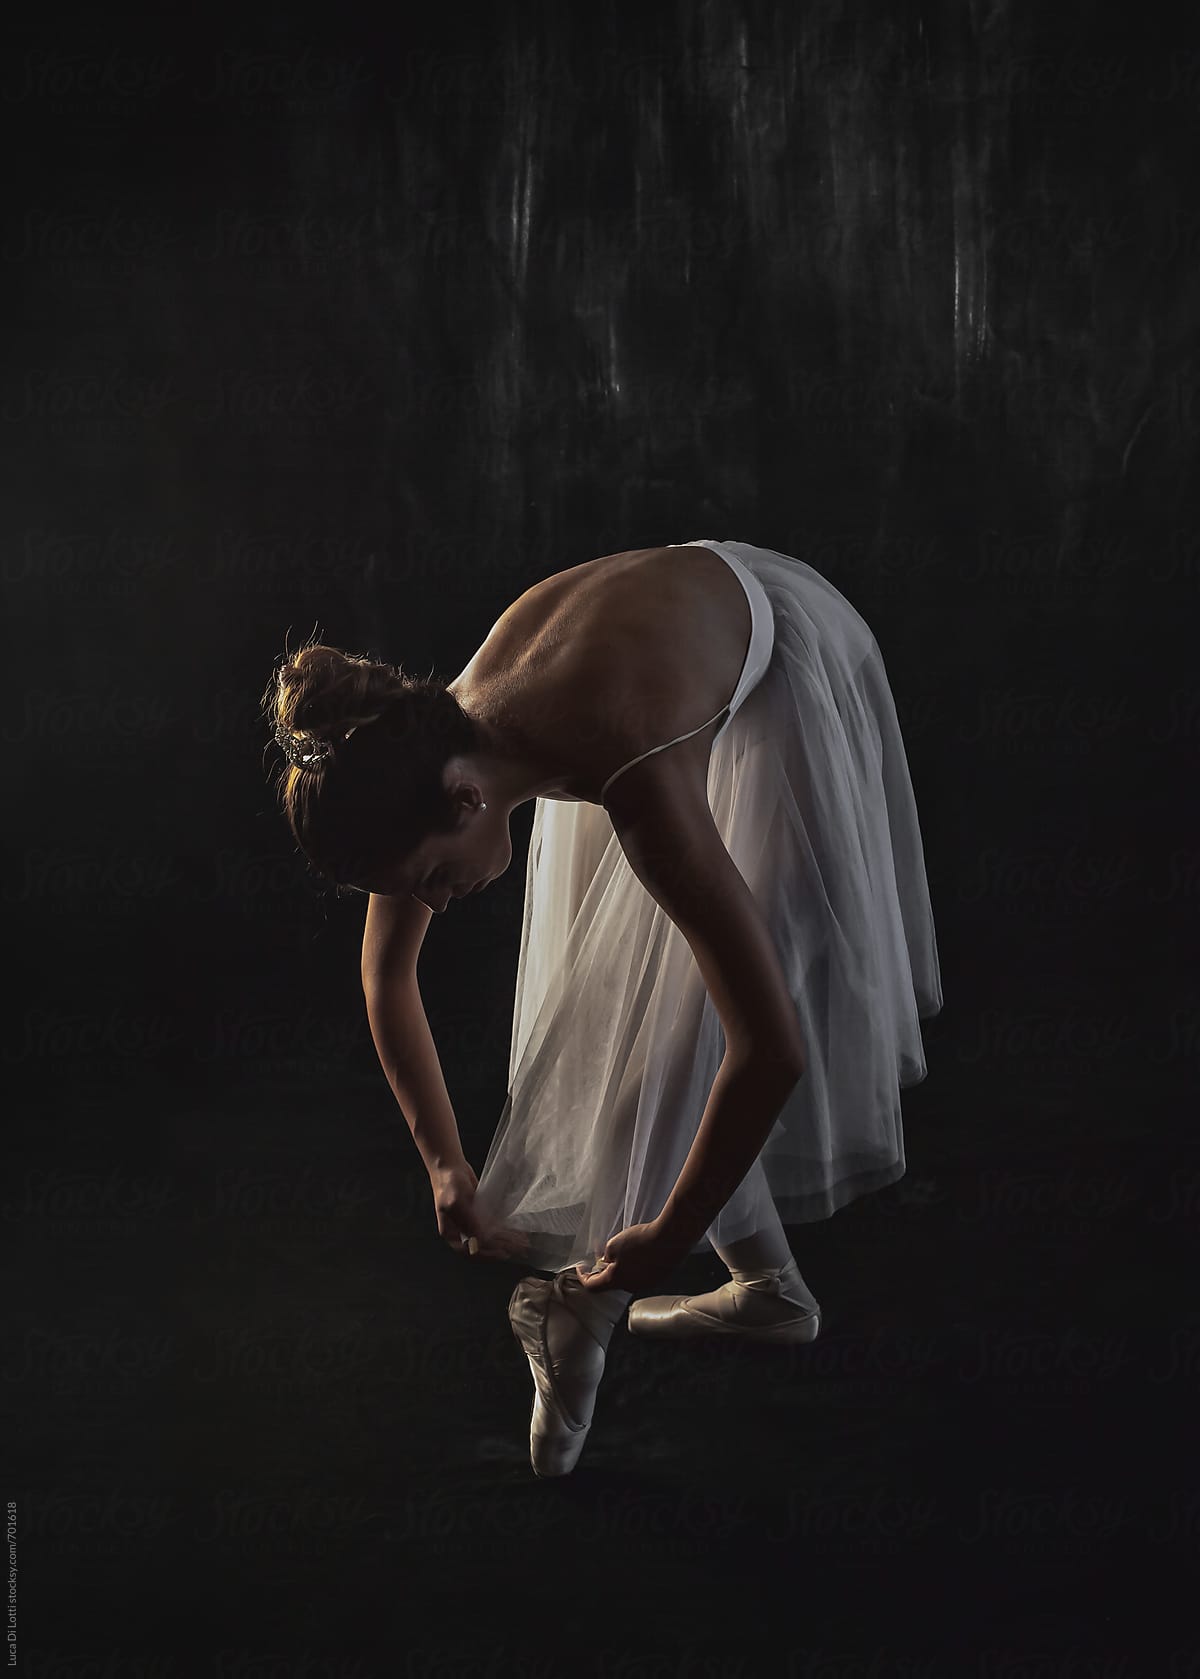 Ballerina against a dark backdrop